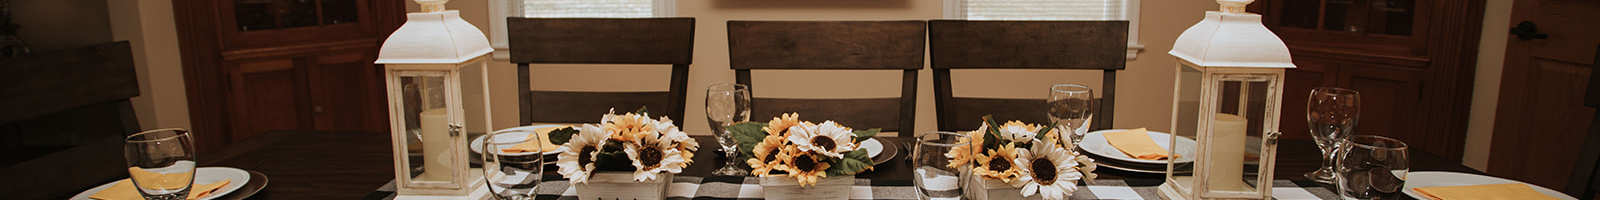 An image depicting the dining room at Grandma's House at Circle K Farm